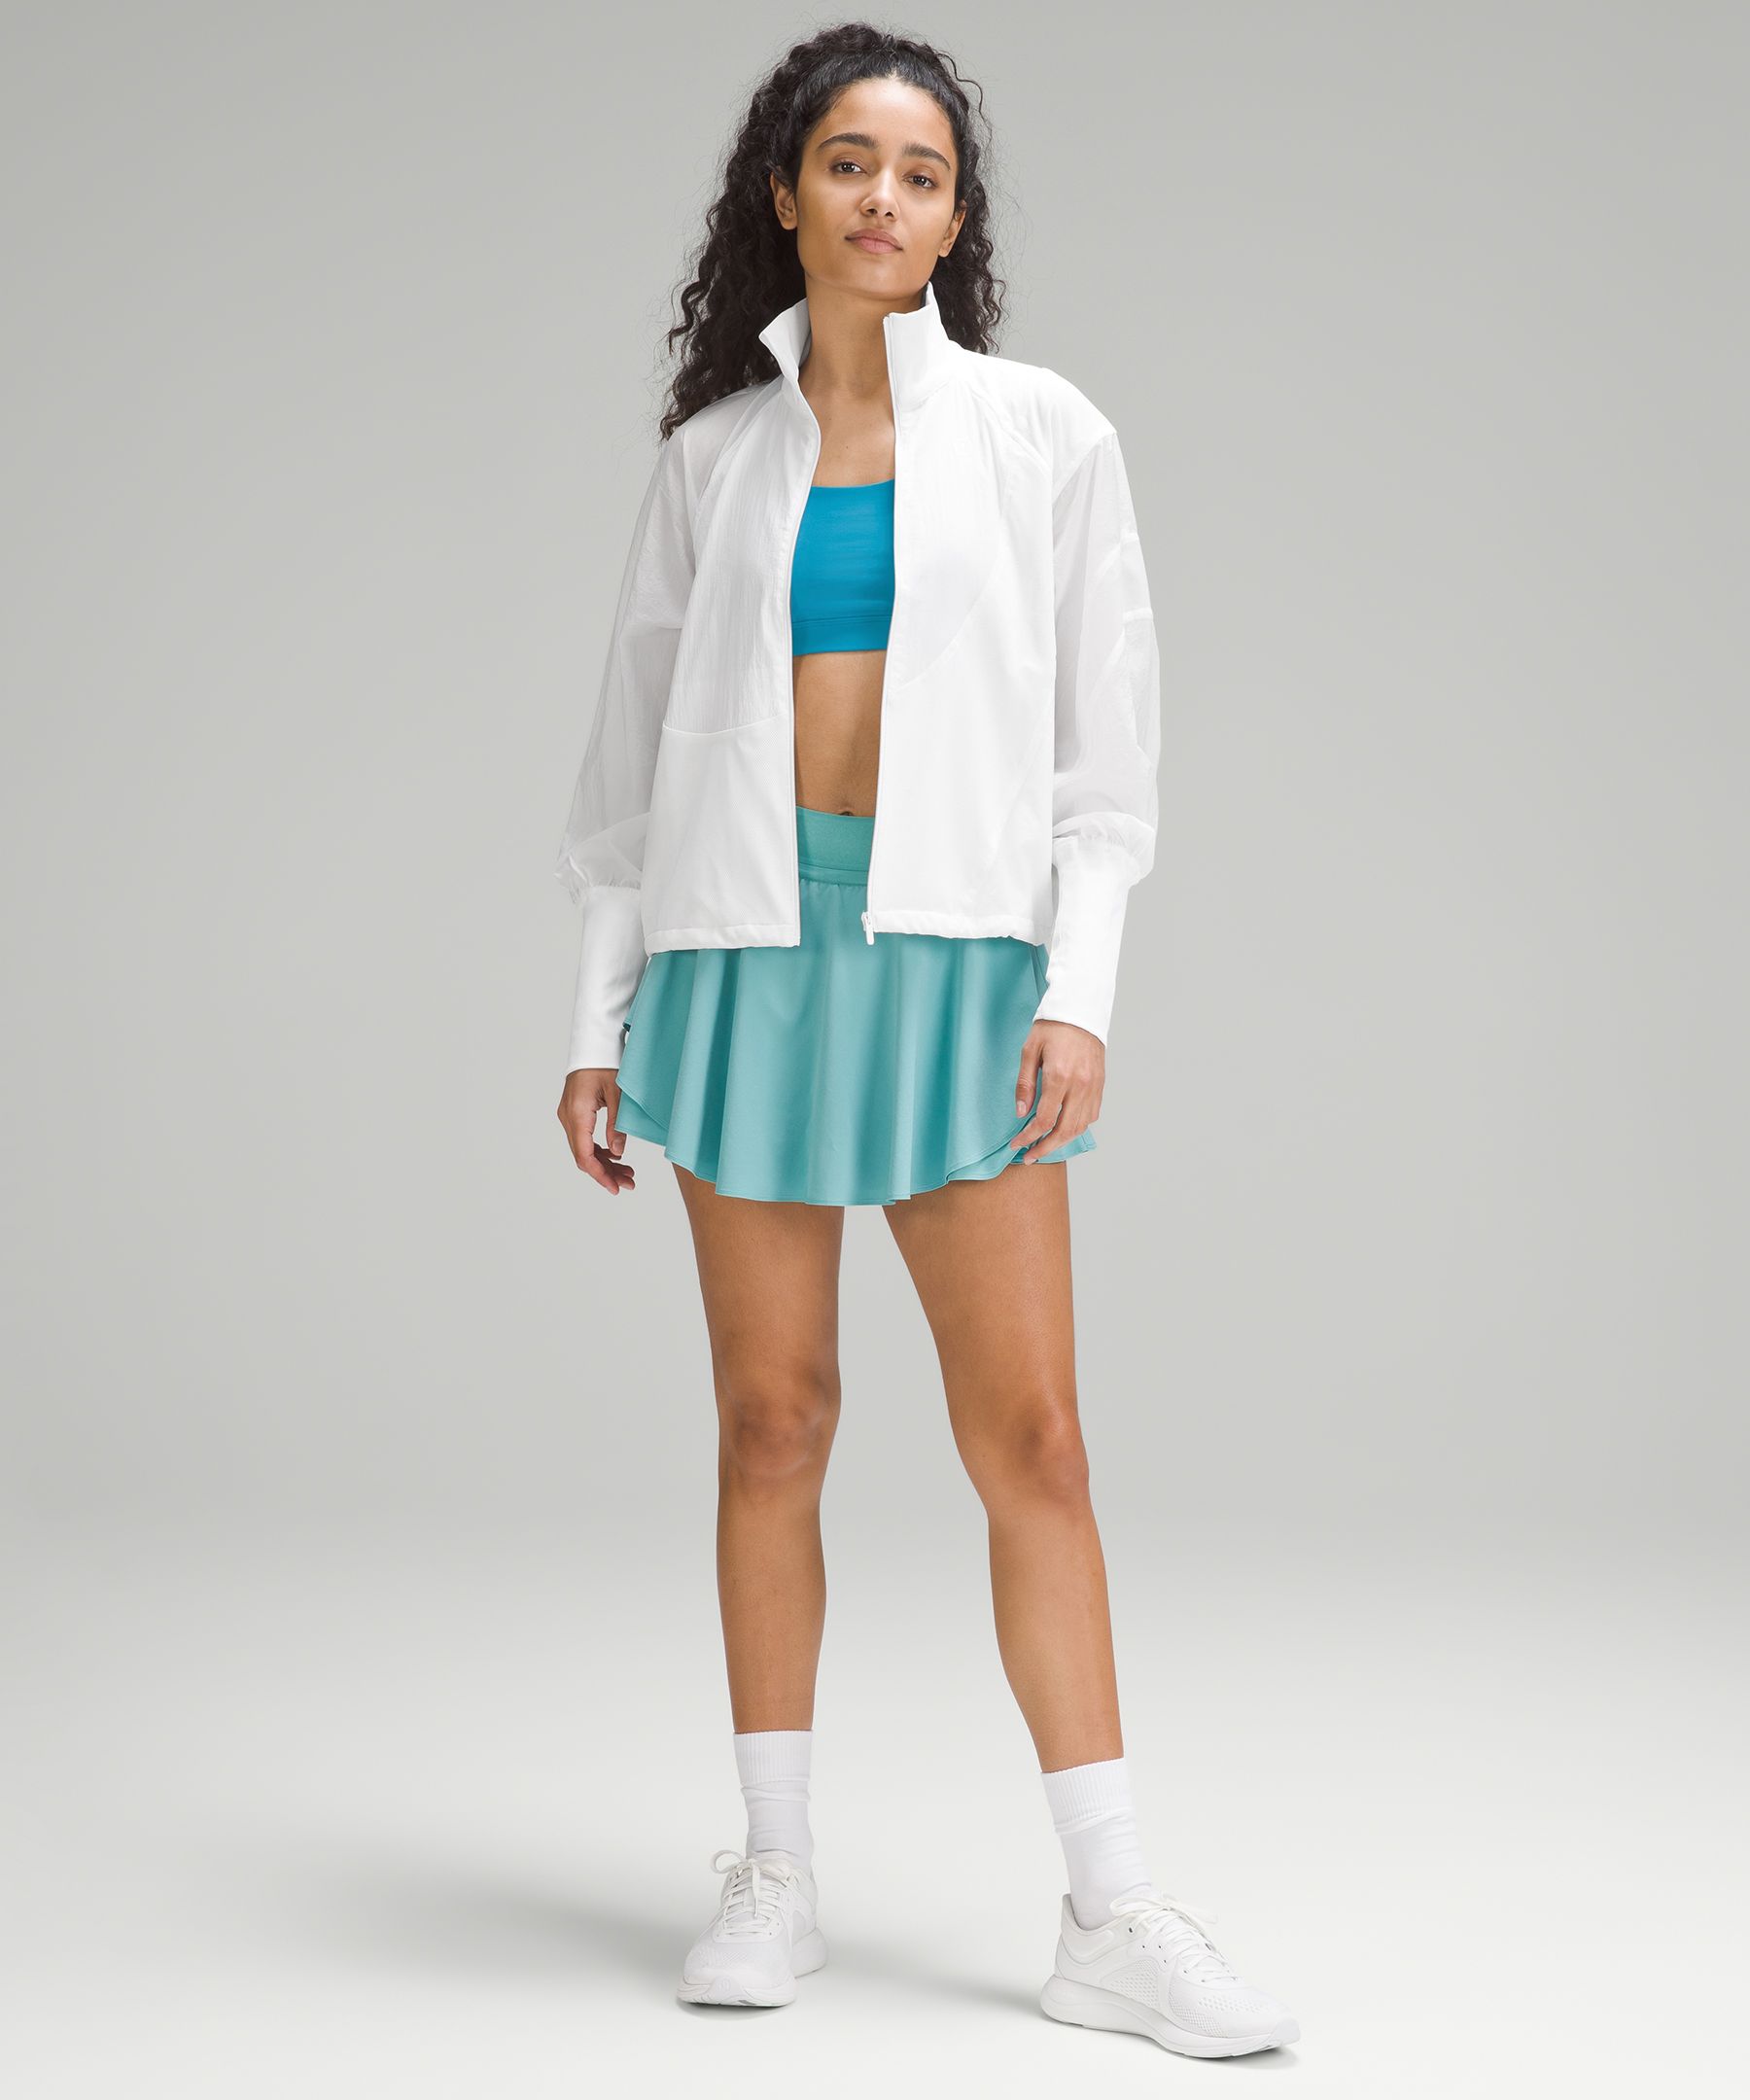 lululemon jacket + tennis skirt = an unmatched combo, Lululemon Define  Jacket